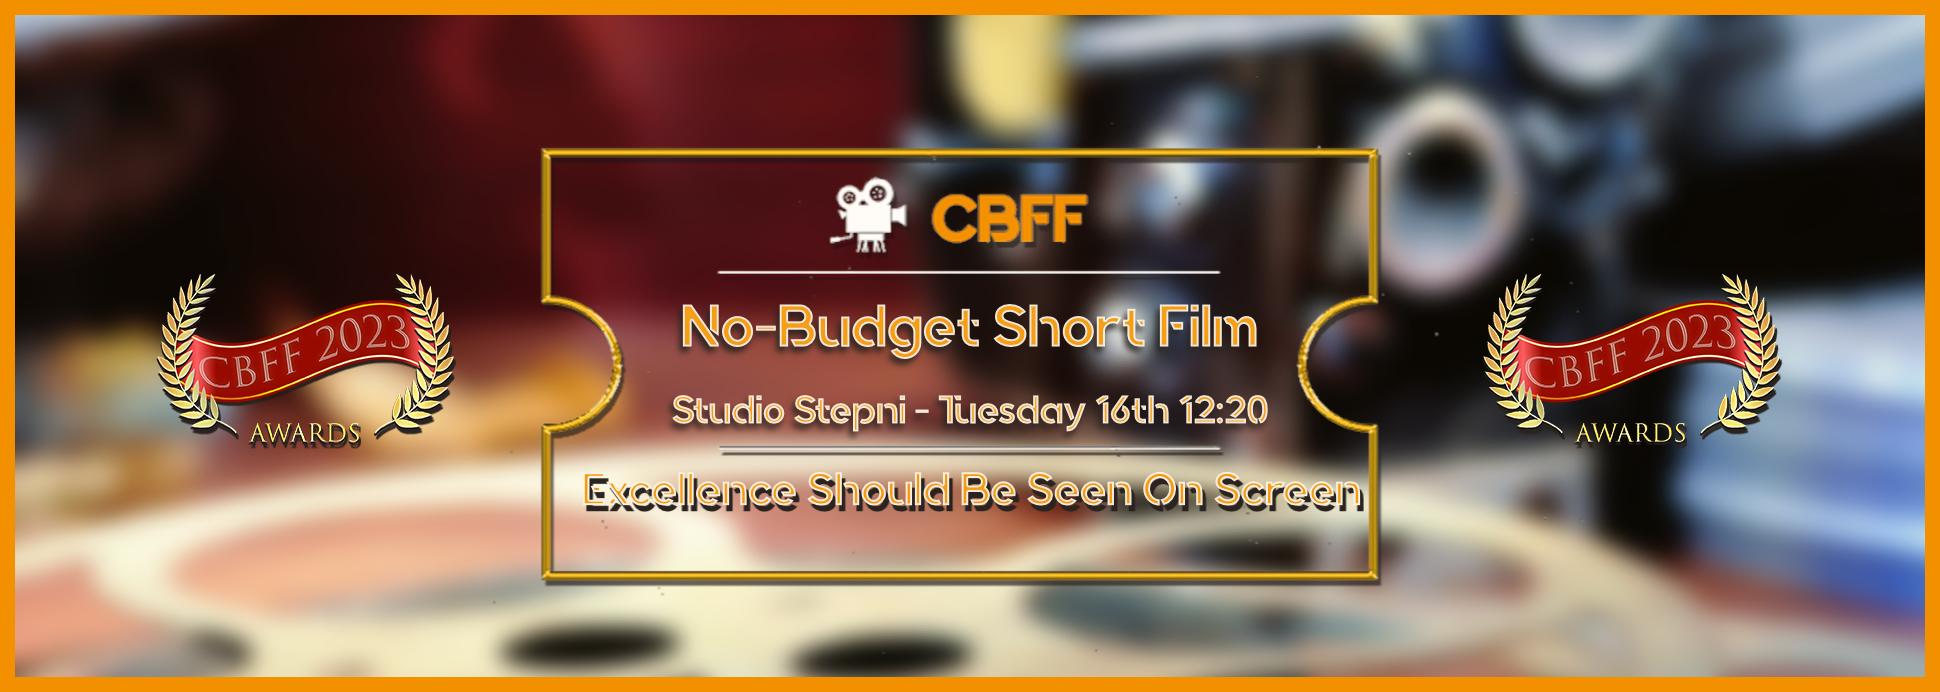 Studio Stepni No-Budget Short Film 16th 12:20